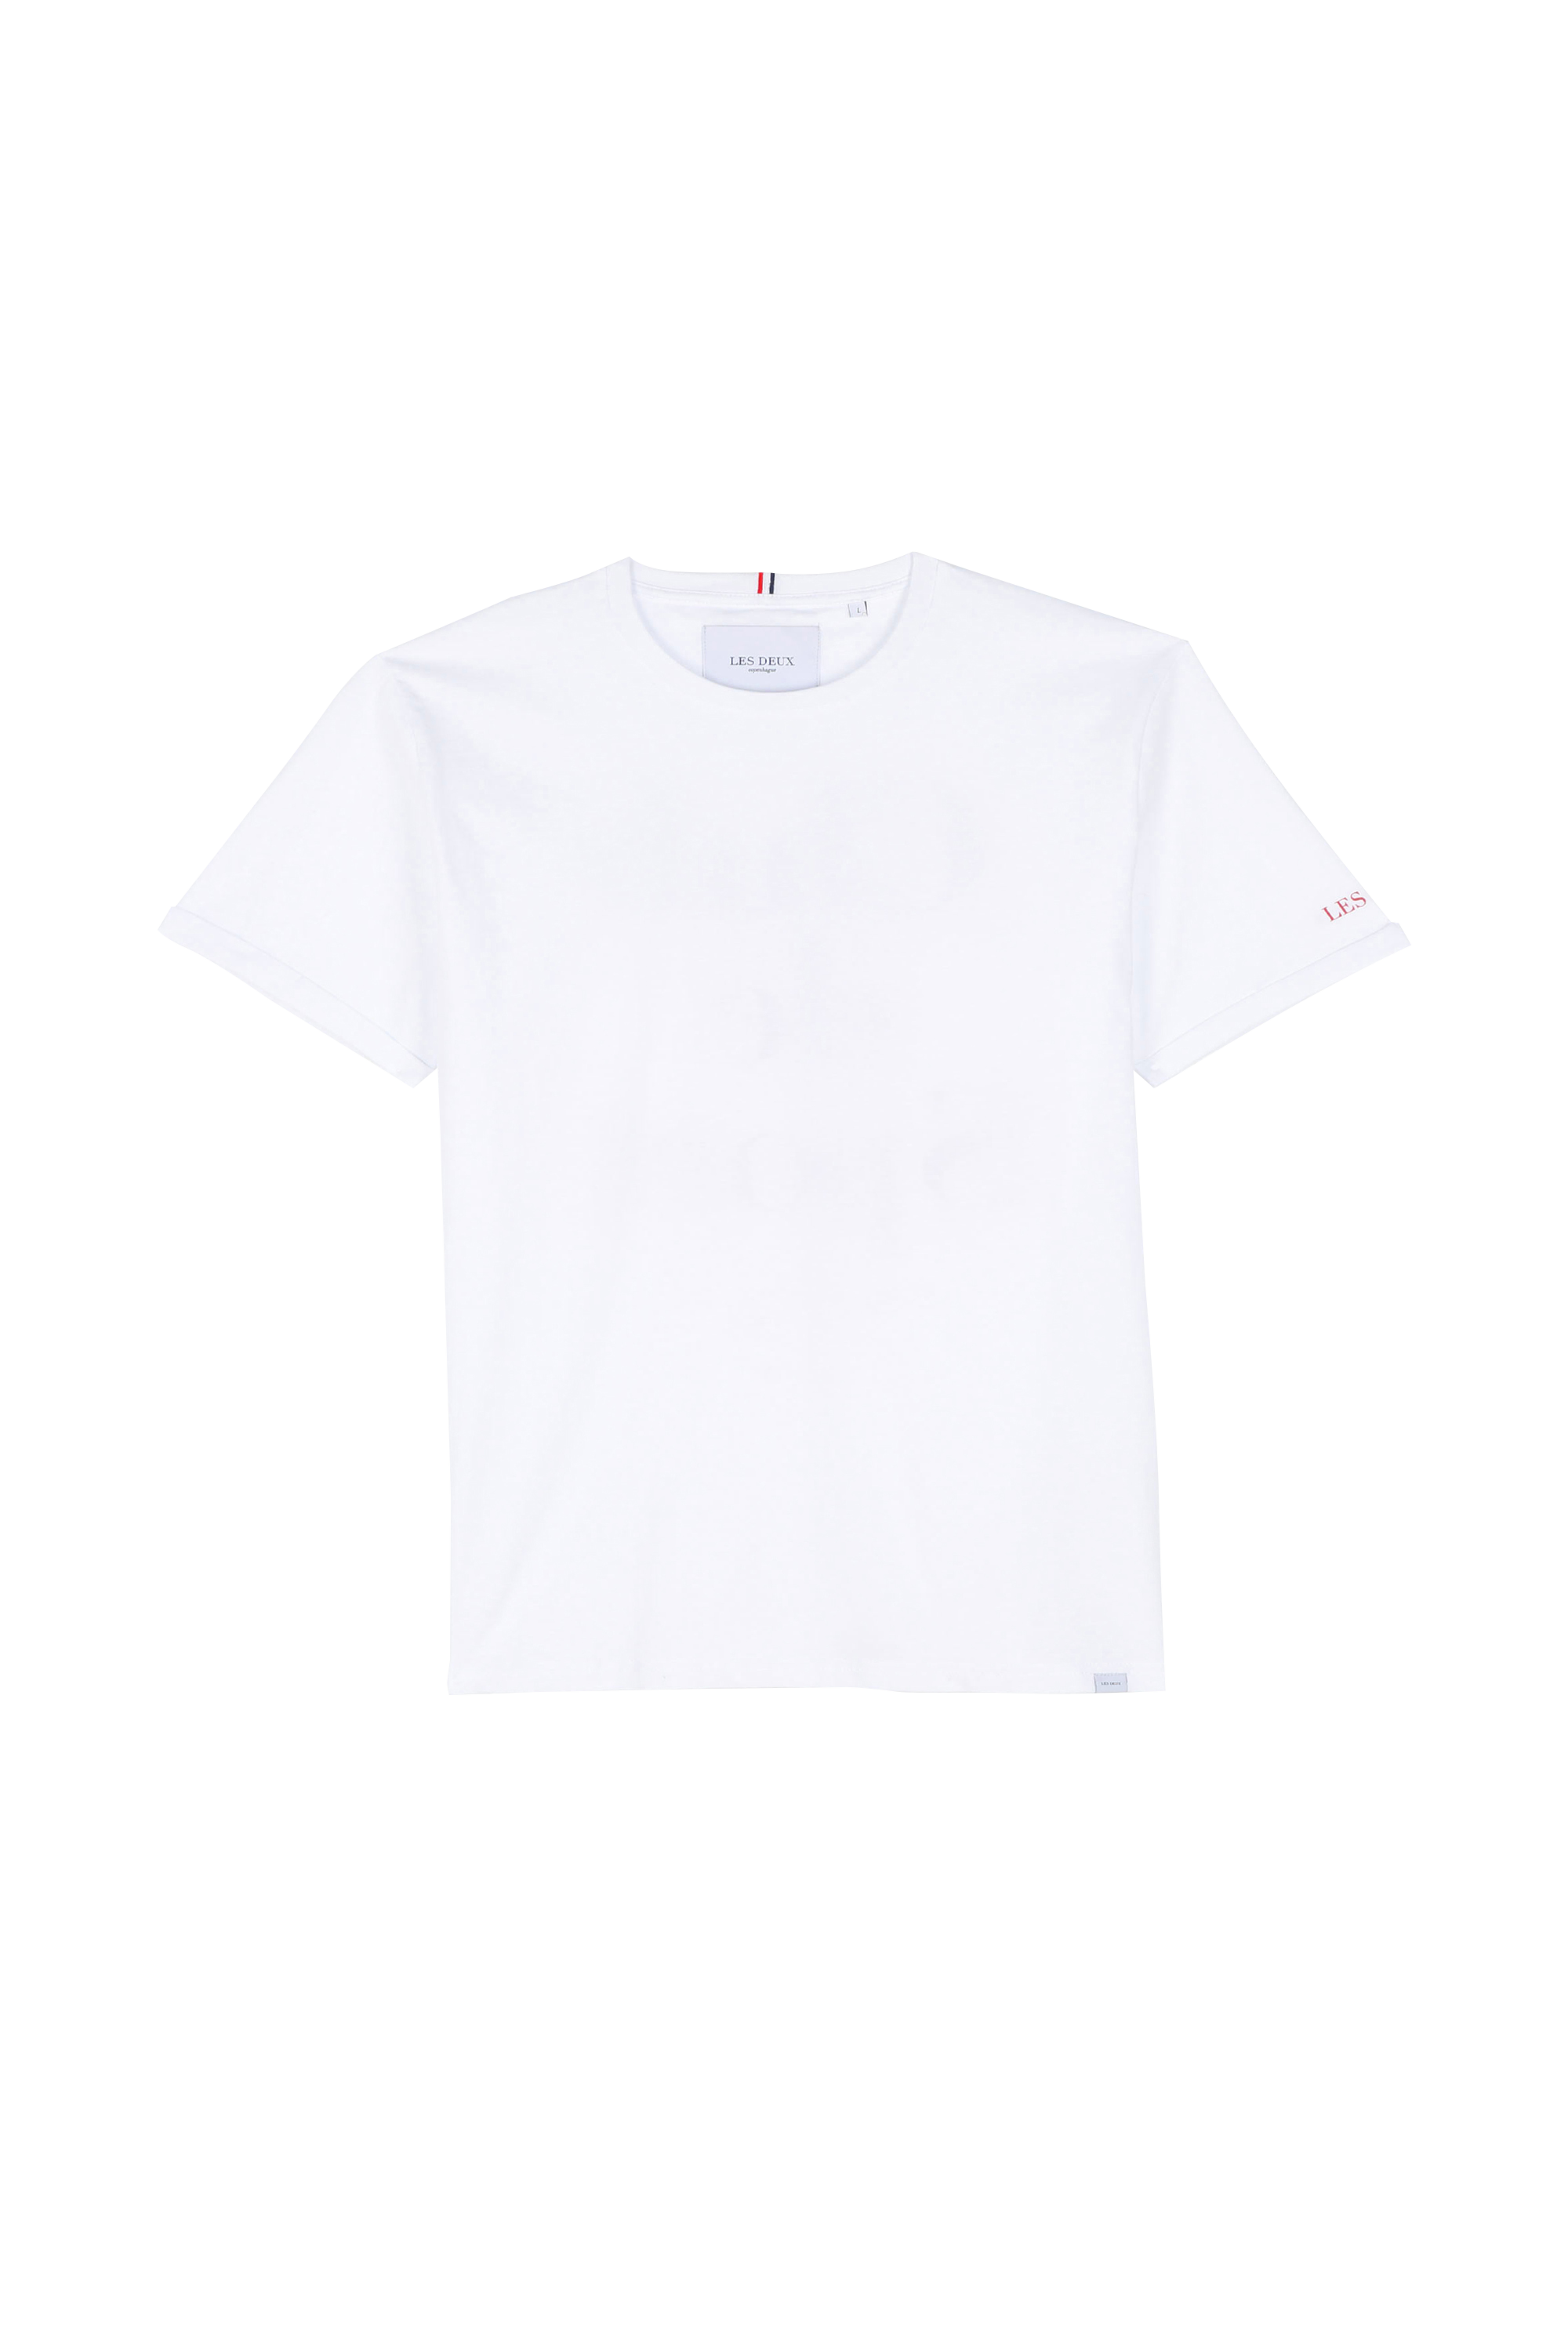 Carhartt Wip Citadium Homme Vêtements Tops & T-shirts T-shirts Manches courtes 